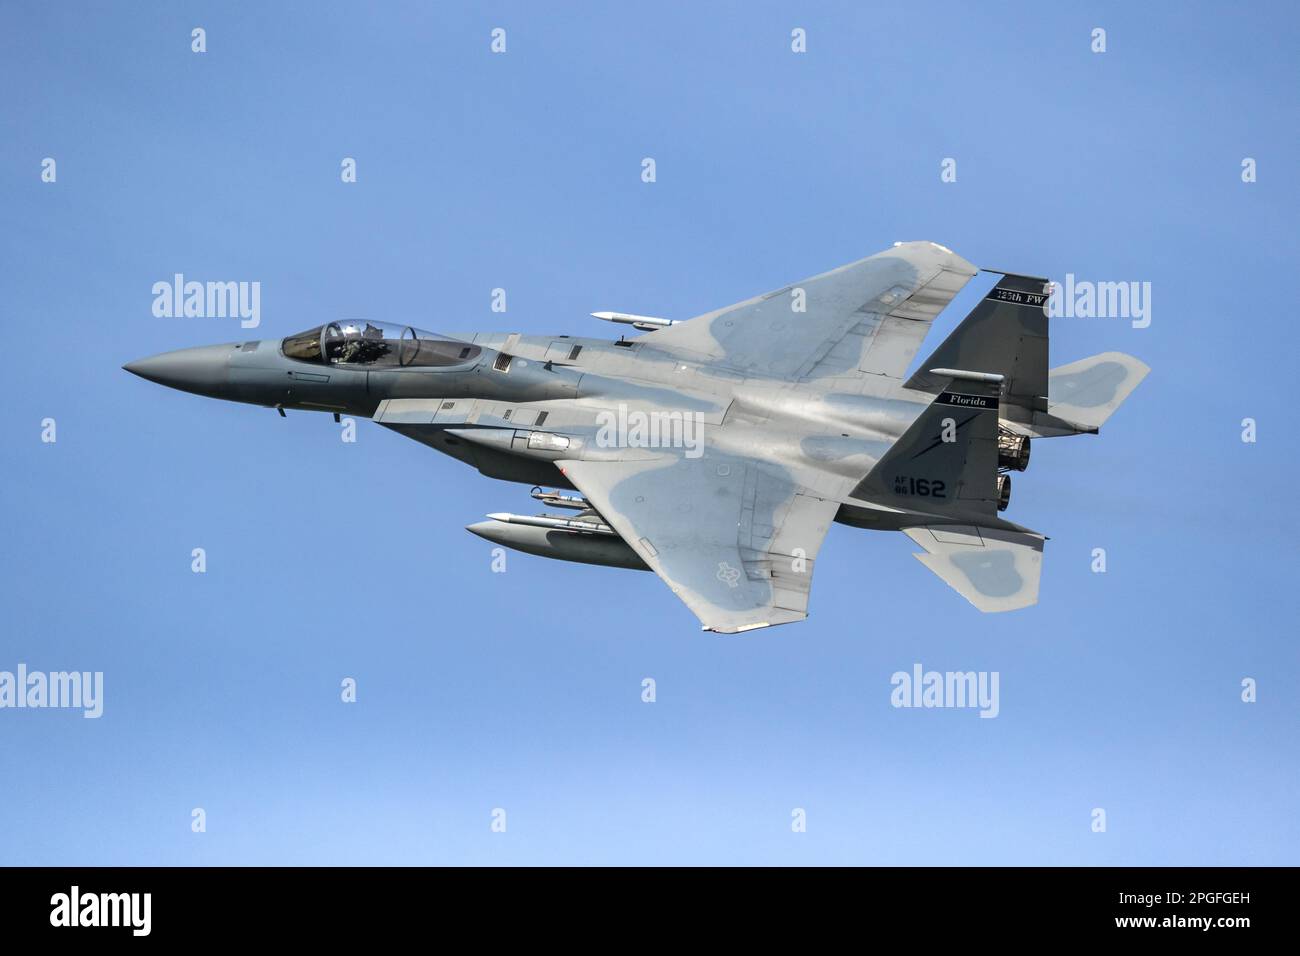 US Air Force F-15 Eagle Fighter Jet Aircraft aus Florida ANG im Flug während Übung Friian Flag. Leeuwarden, Niederlande - 5. April 2017 Stockfoto